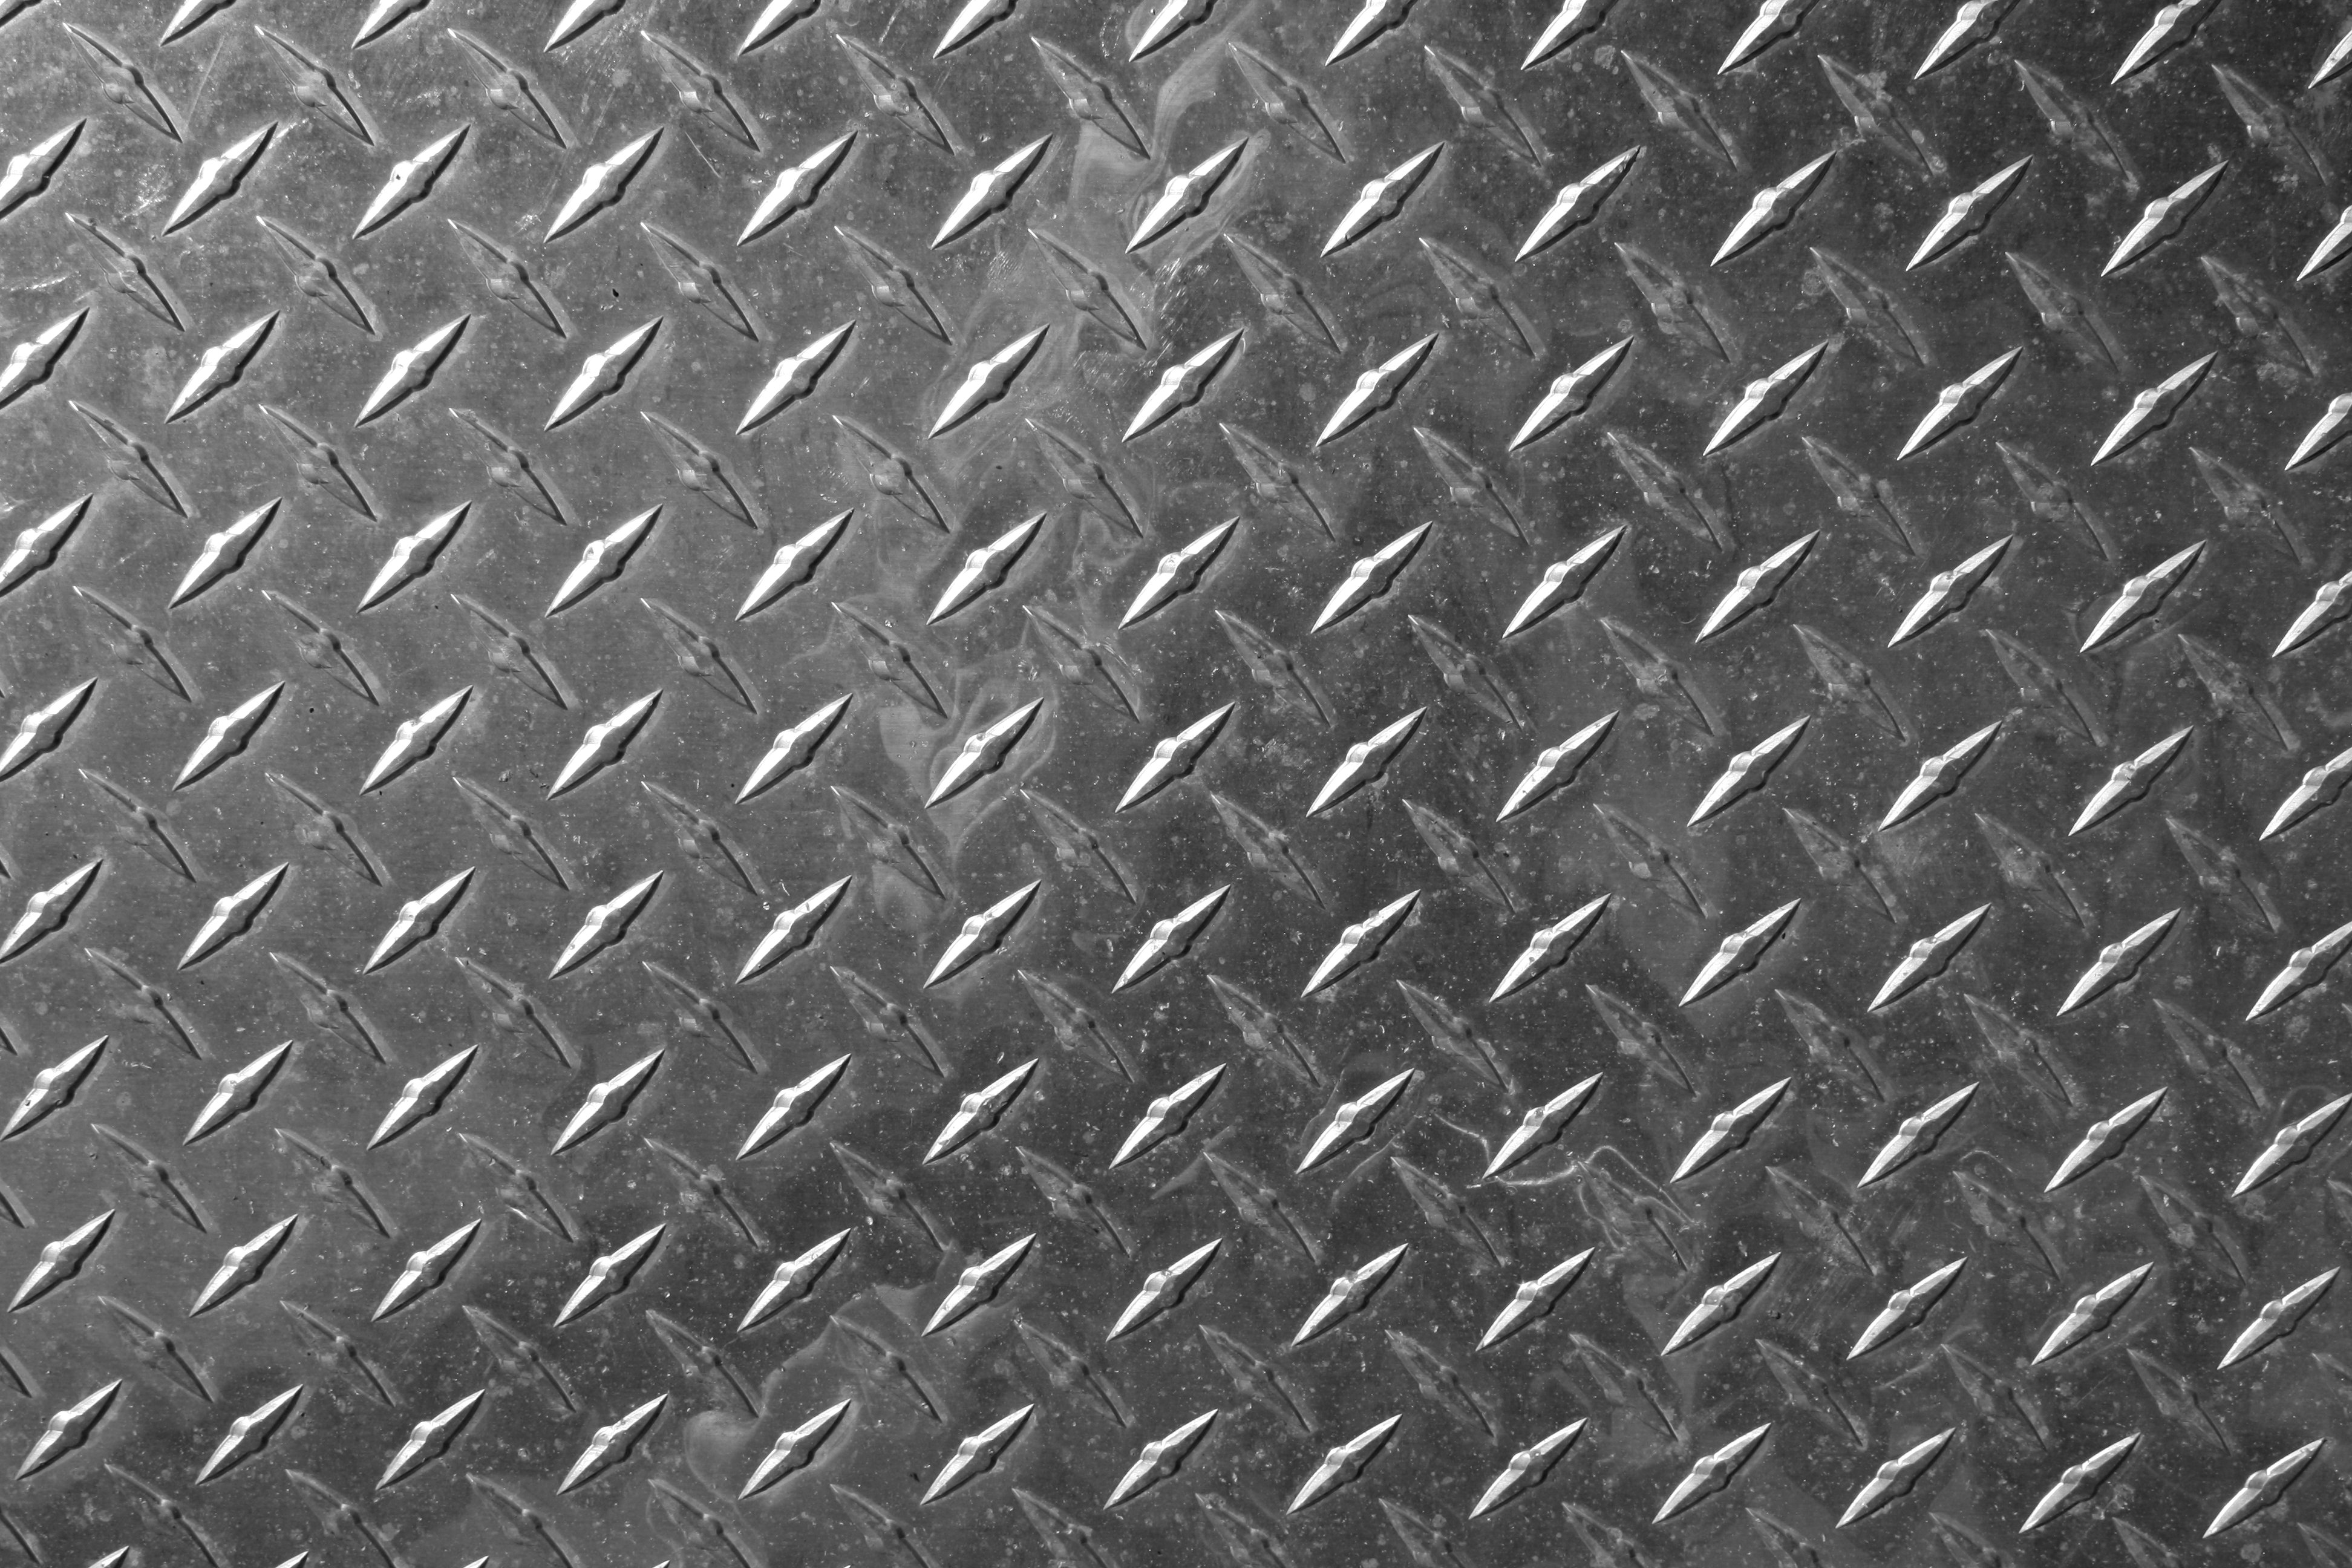 Silver Textured Sheet Metal Texture Picture Free Photograph Photos Public Domain